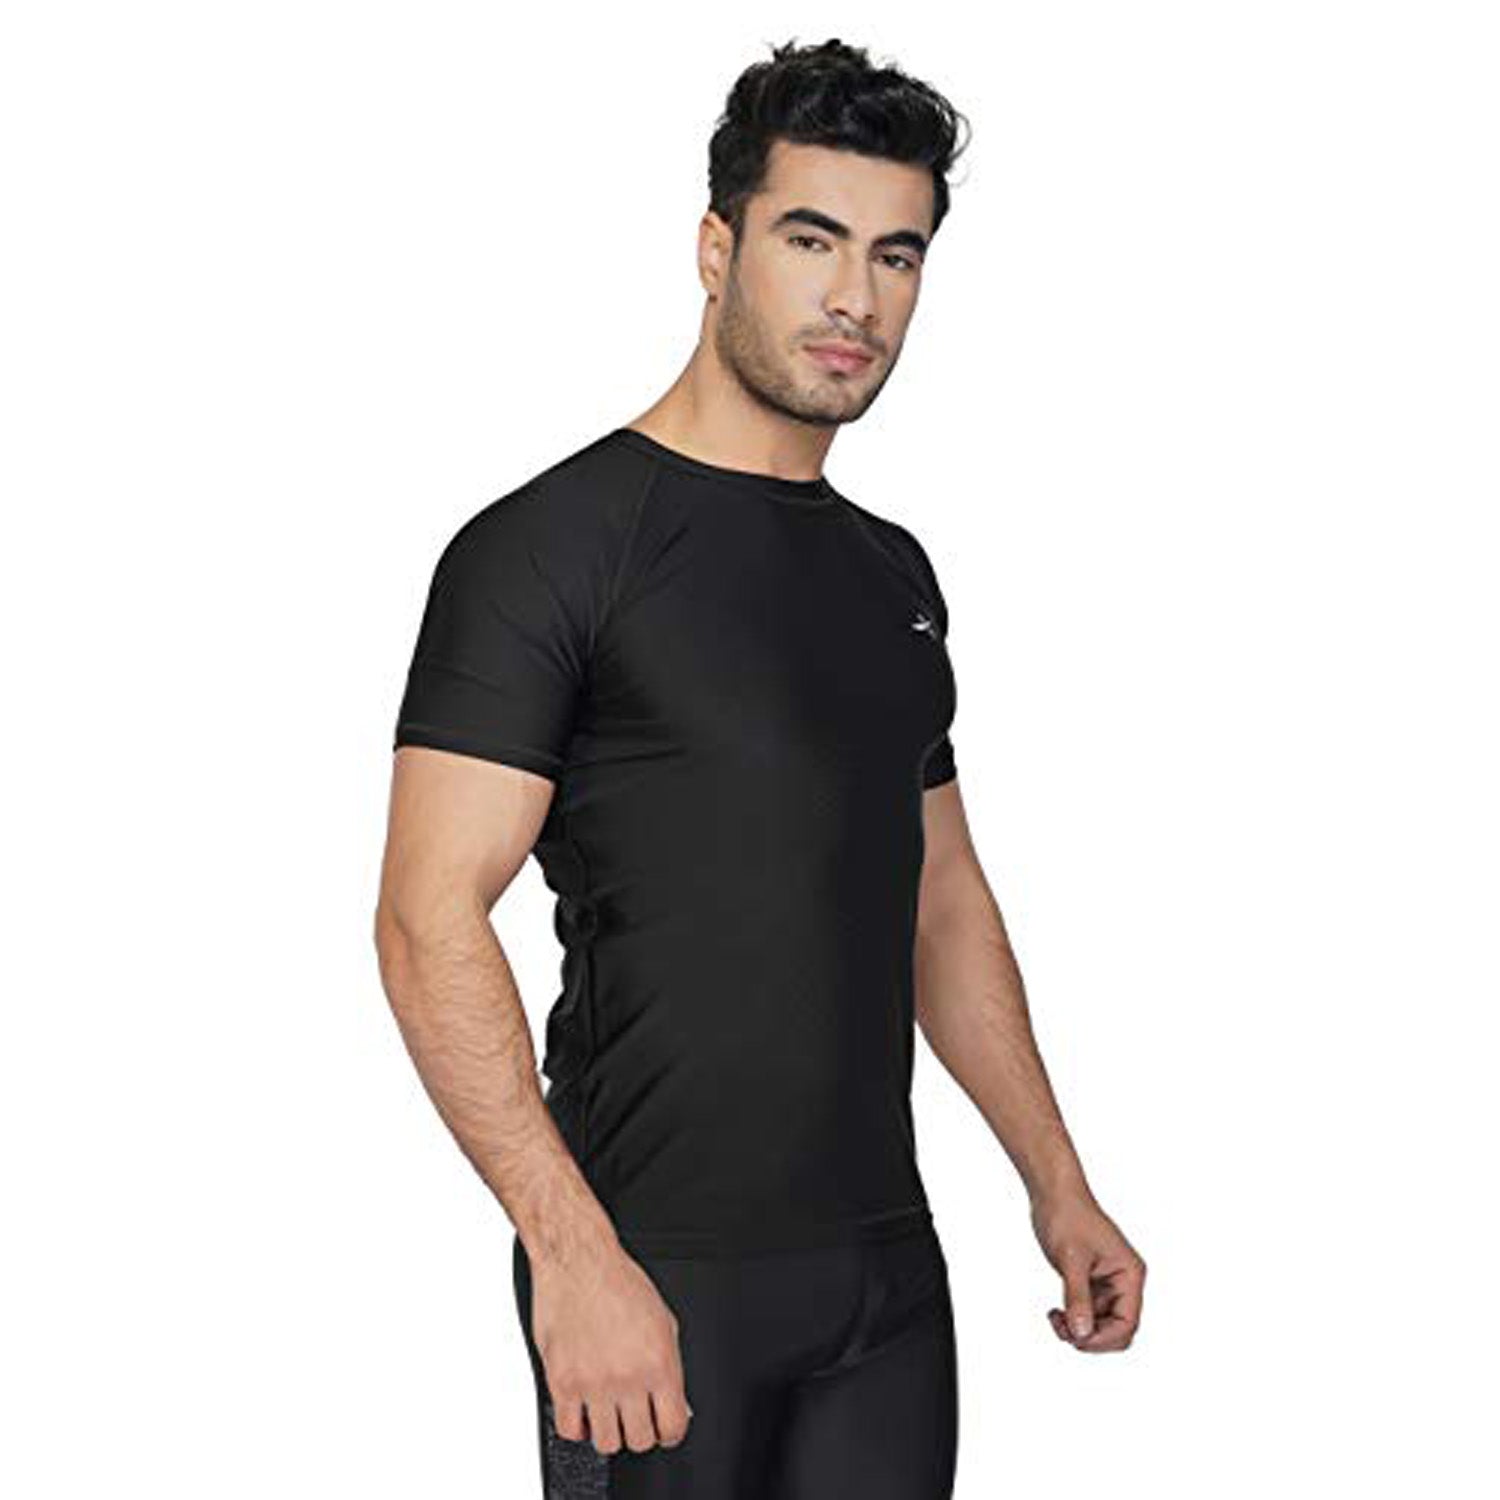 Vector X VTD-021 Men's Skin Fit T-Shirt , Black - Best Price online Prokicksports.com